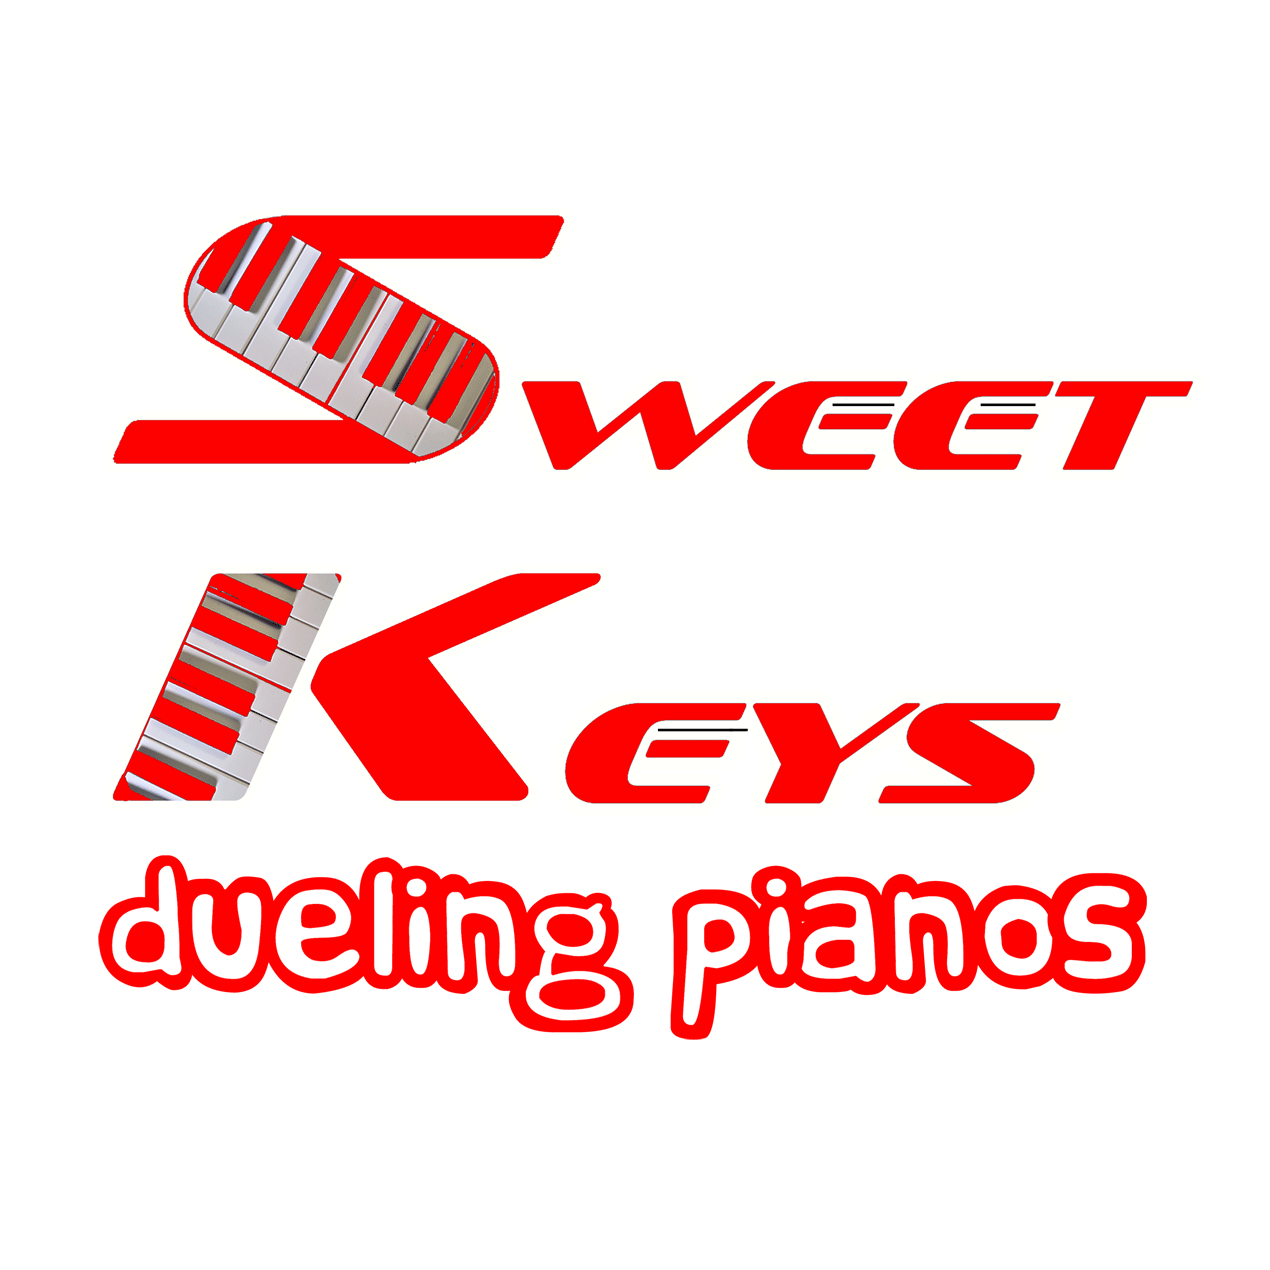 Sweet Keys Dueling Pianos